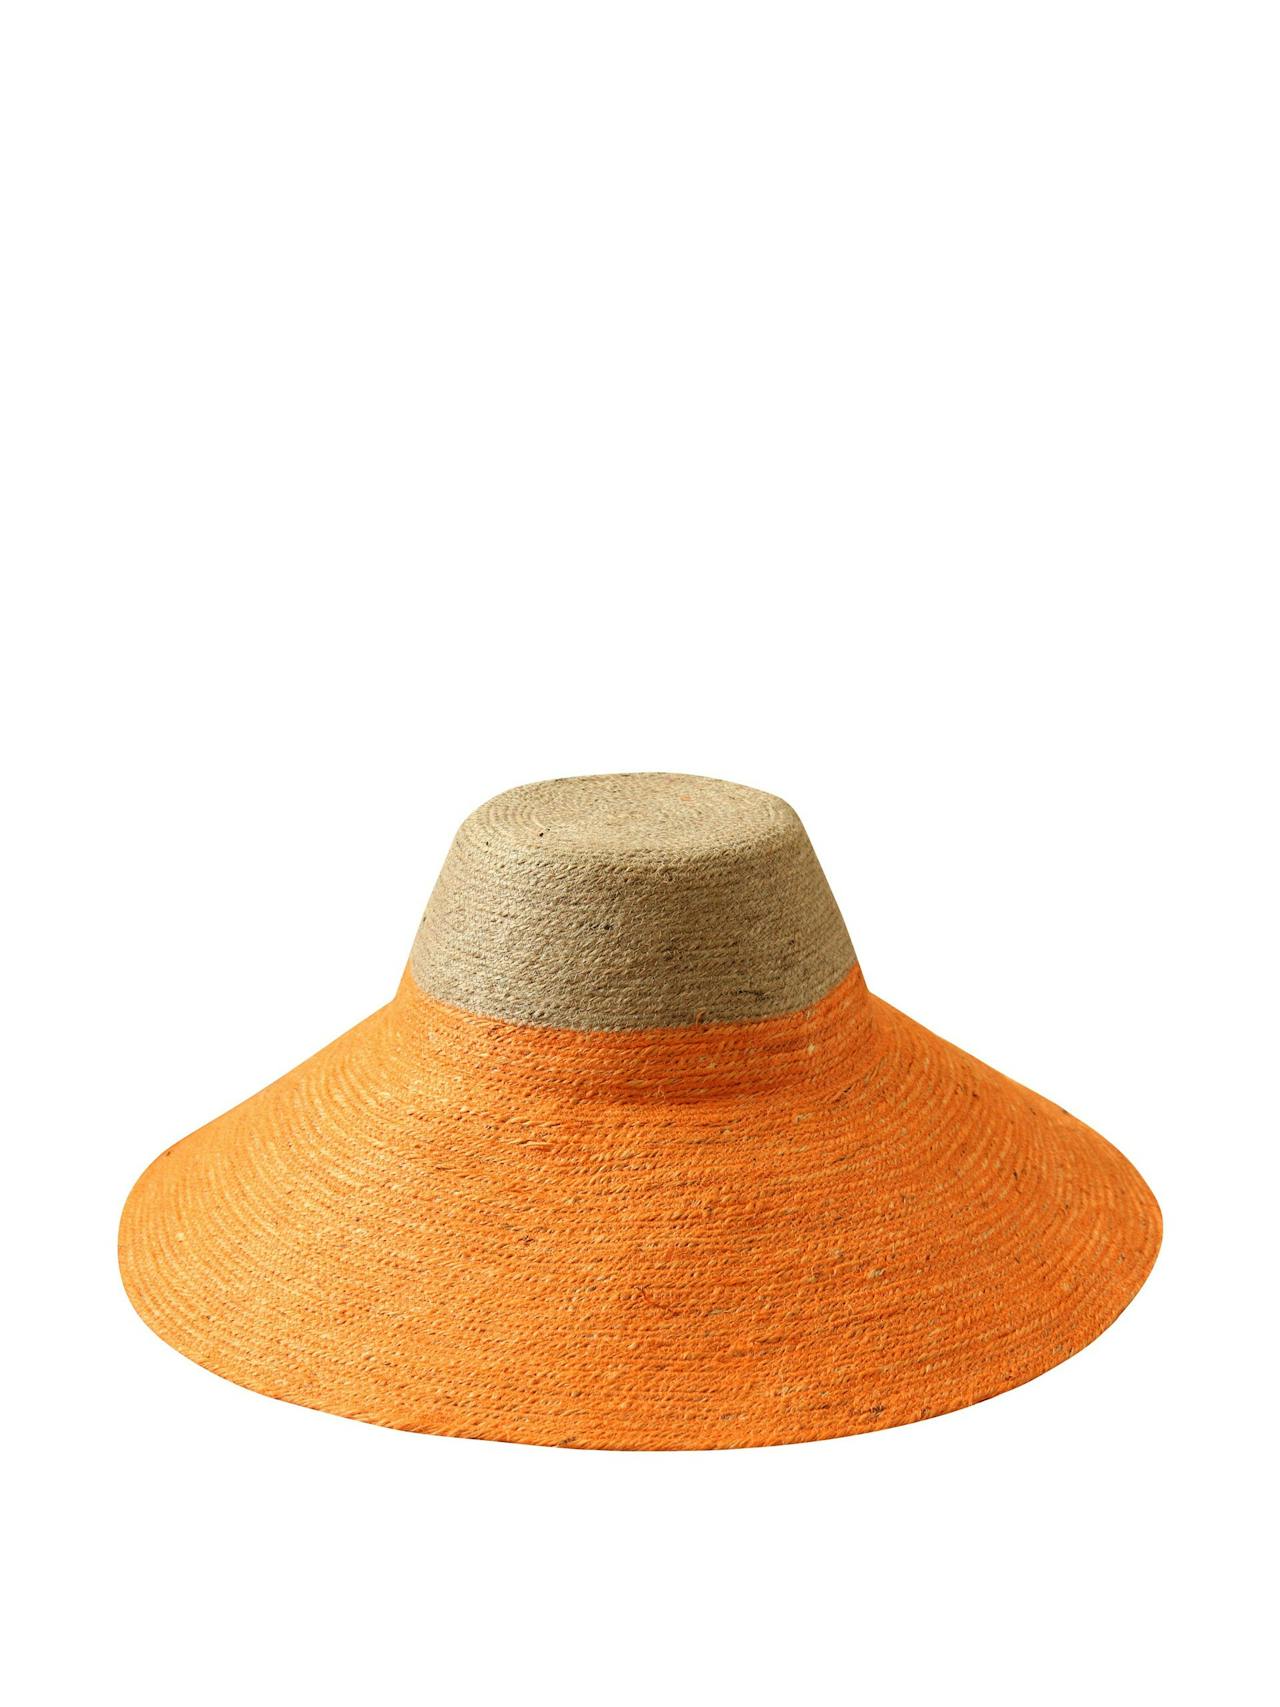 Riri duo jute handwoven straw hat in pumpkin orange